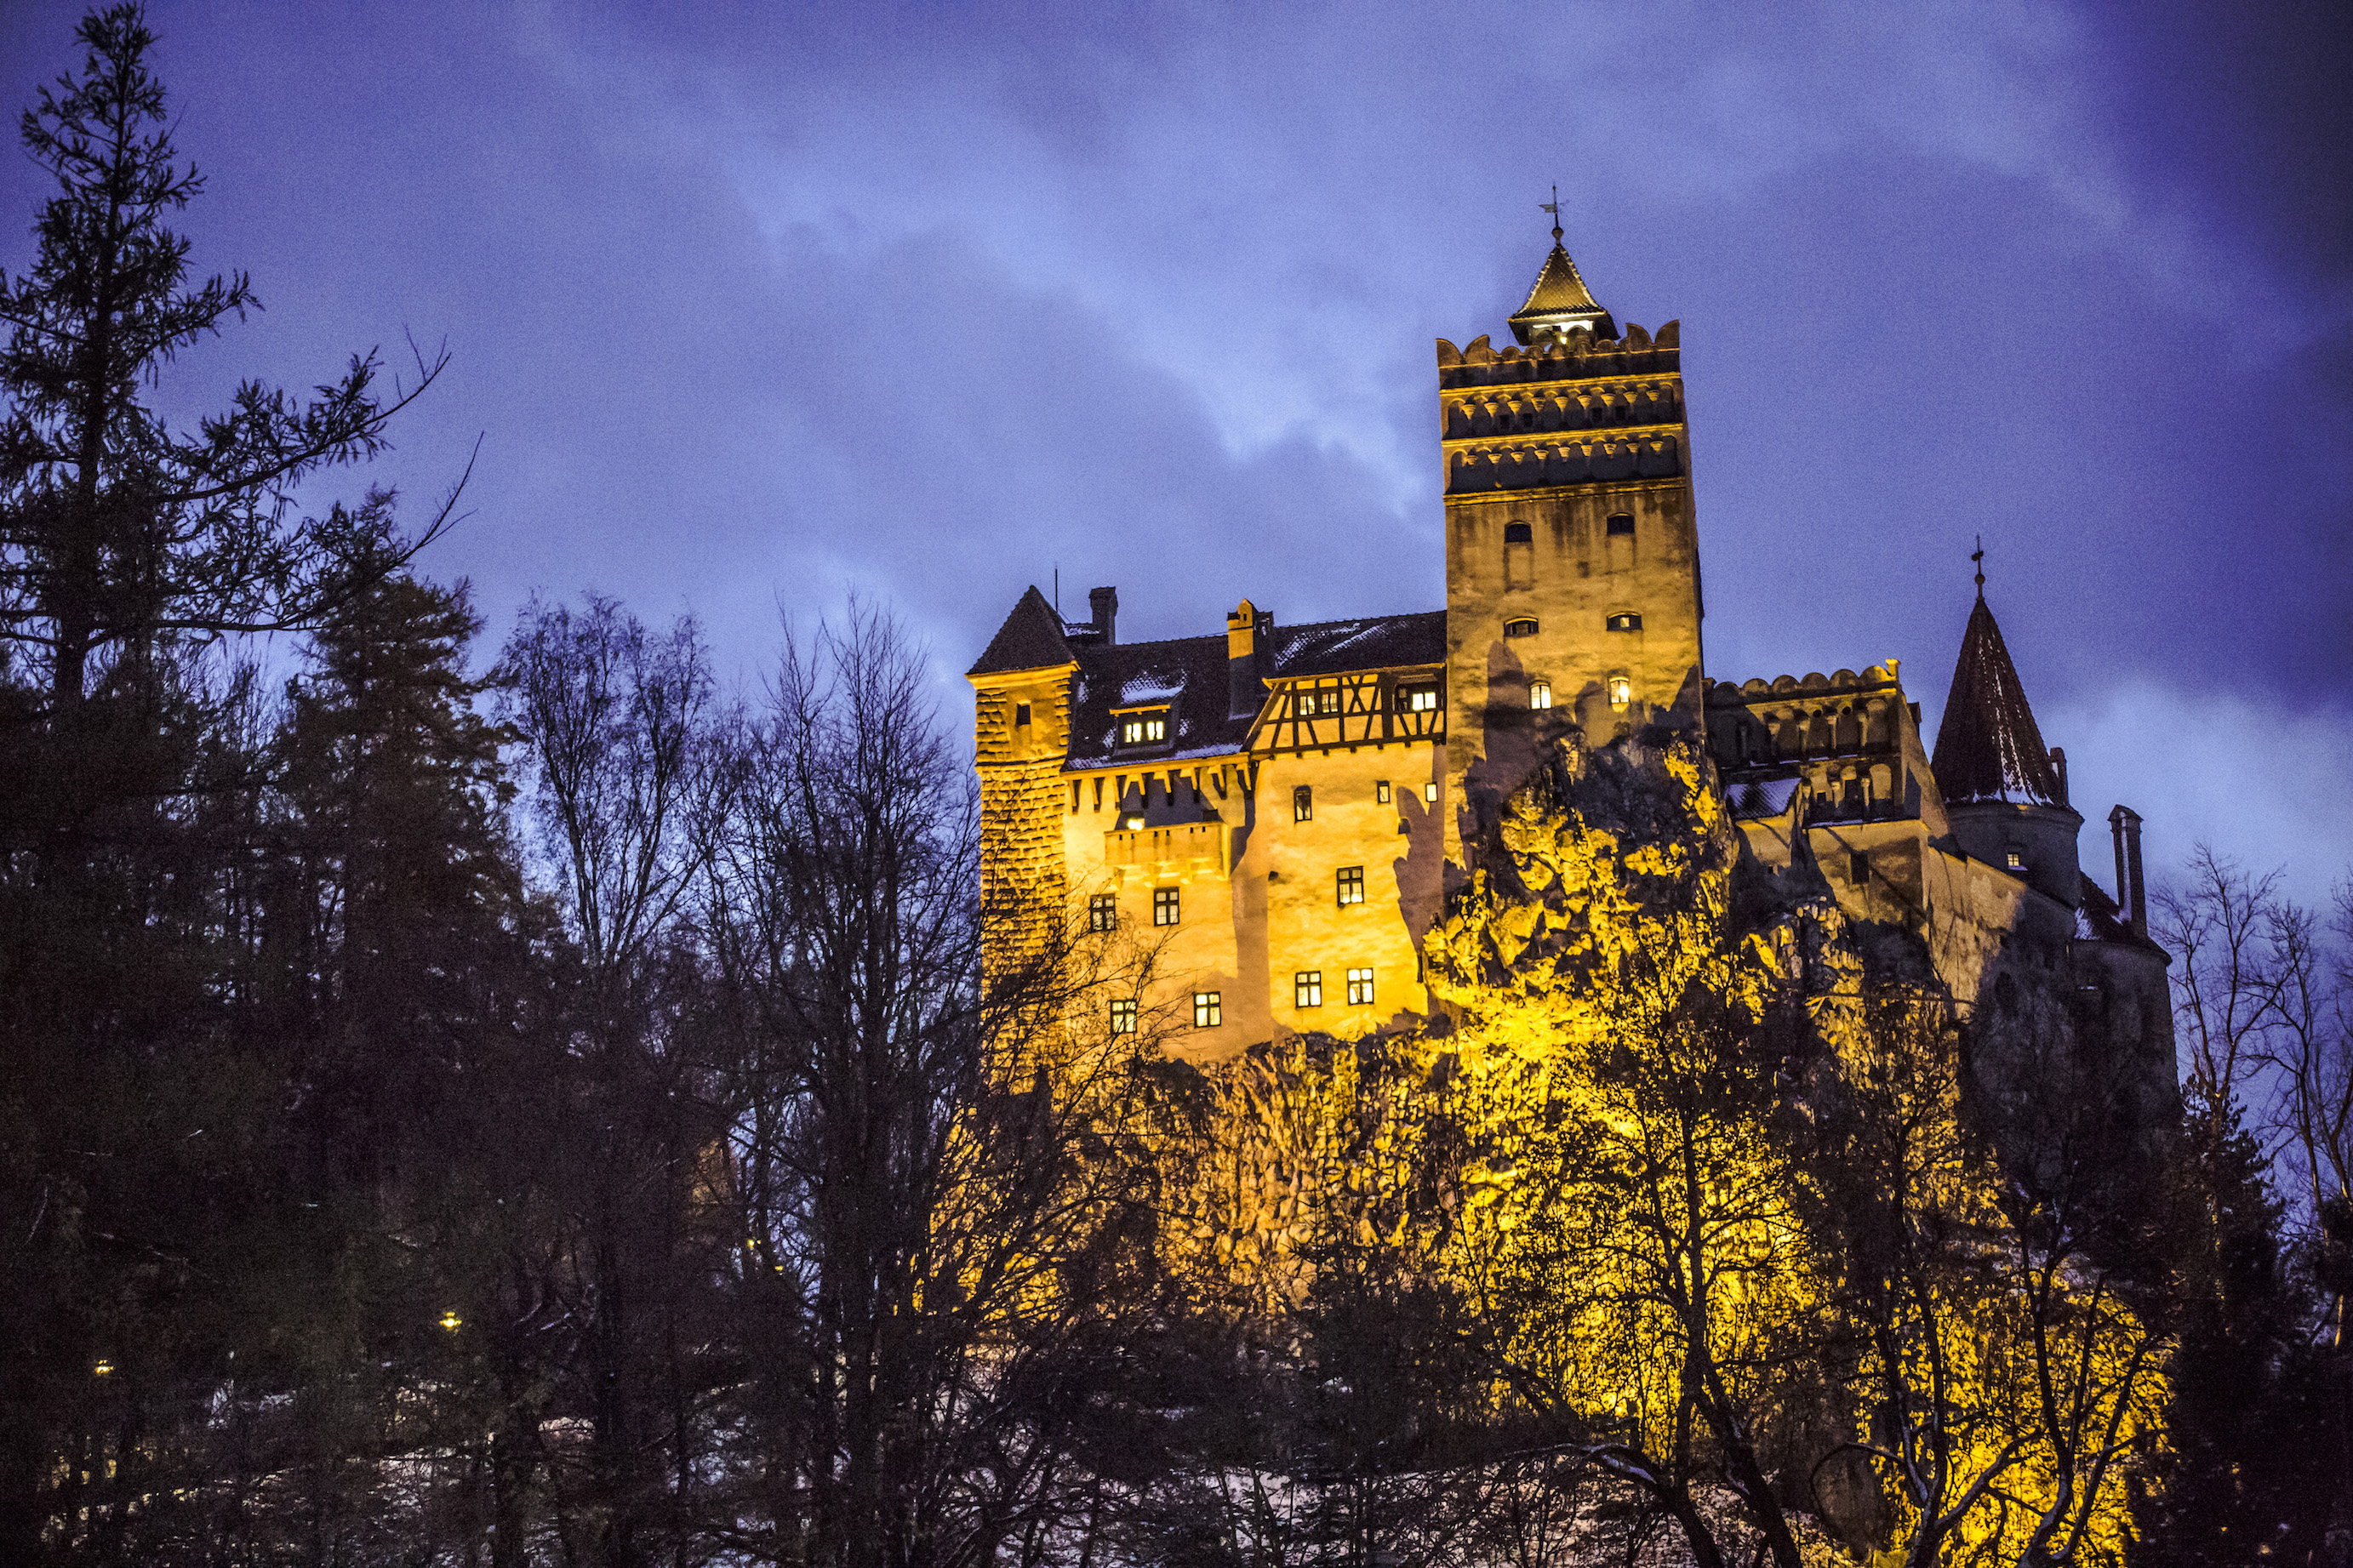 bran castle lit up at night